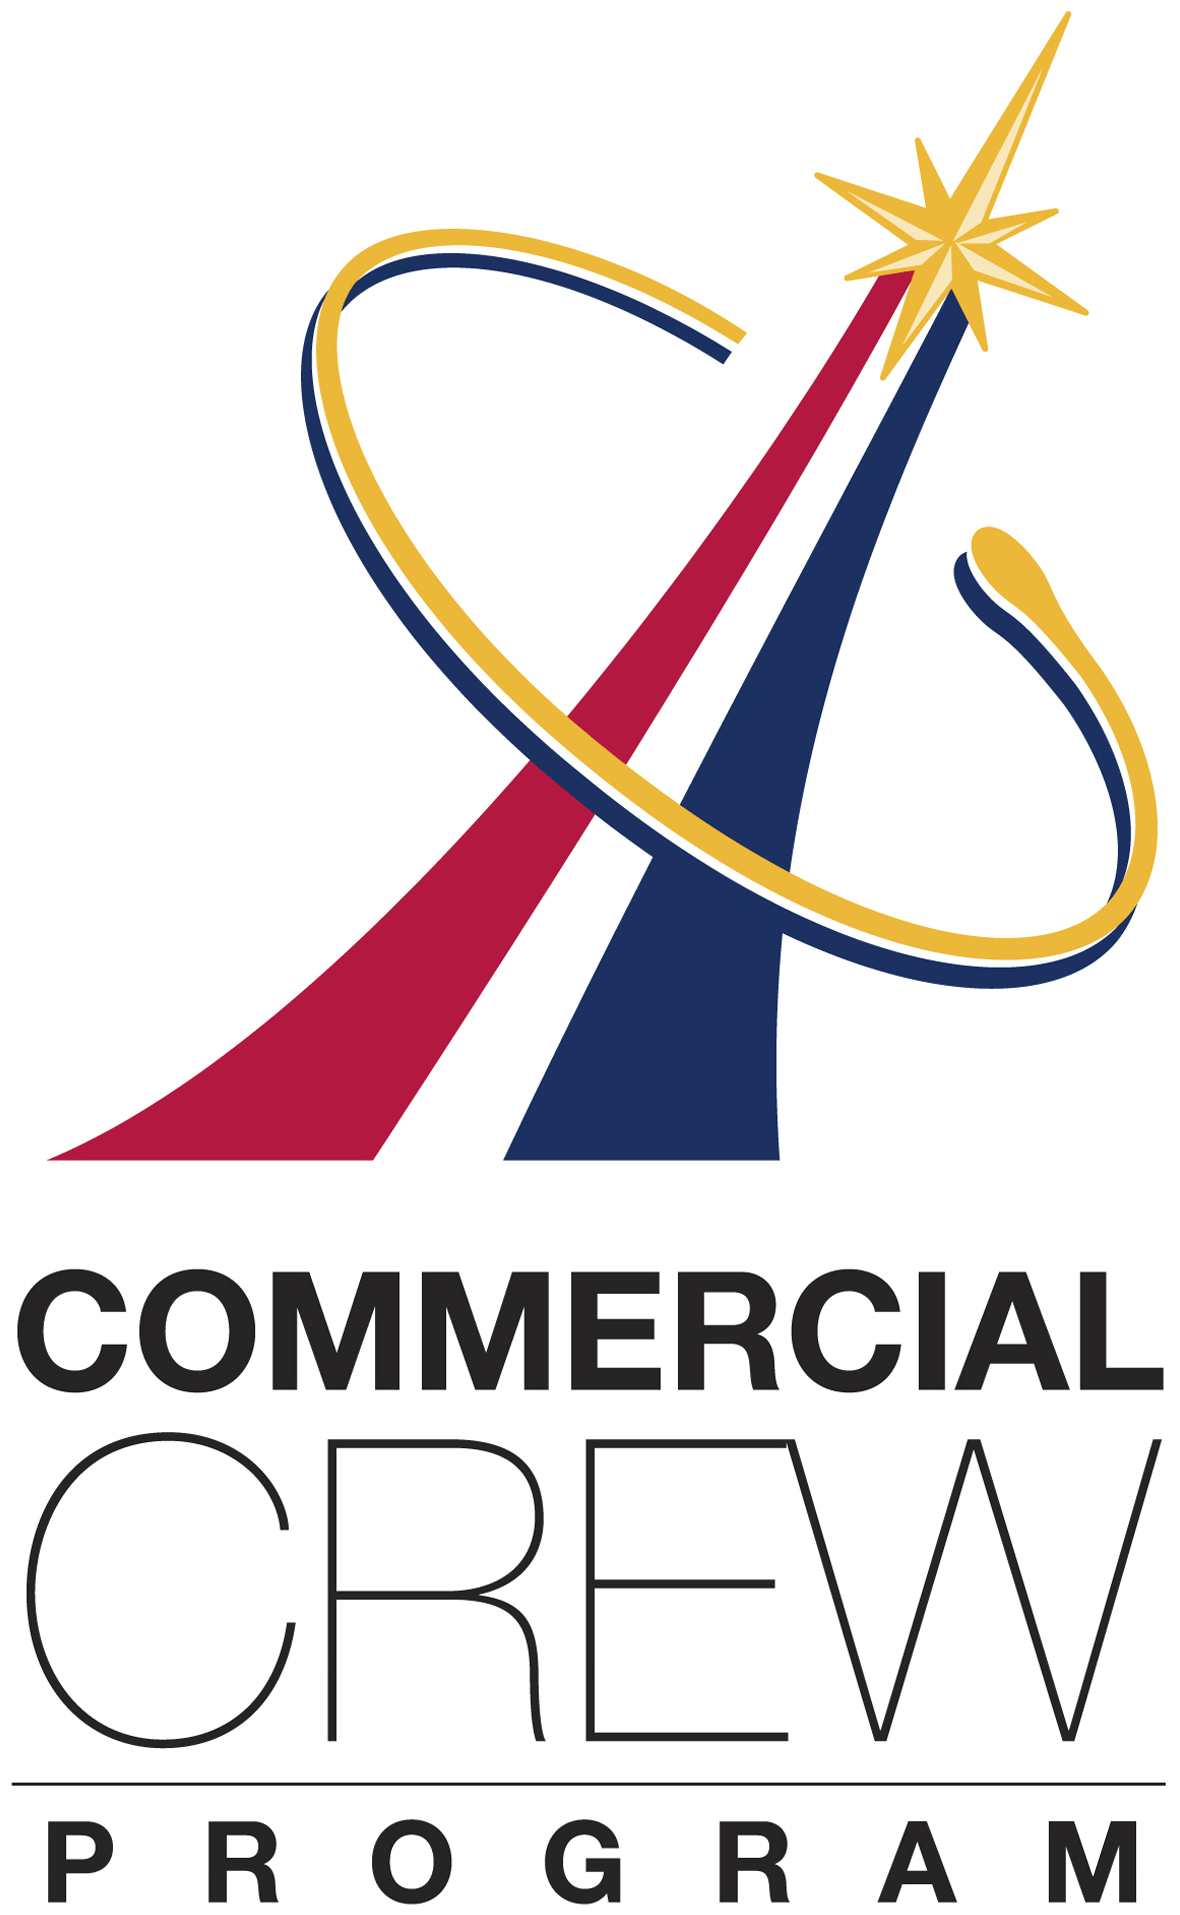 Commercial Logo - Commercial Crew Program logo background.png